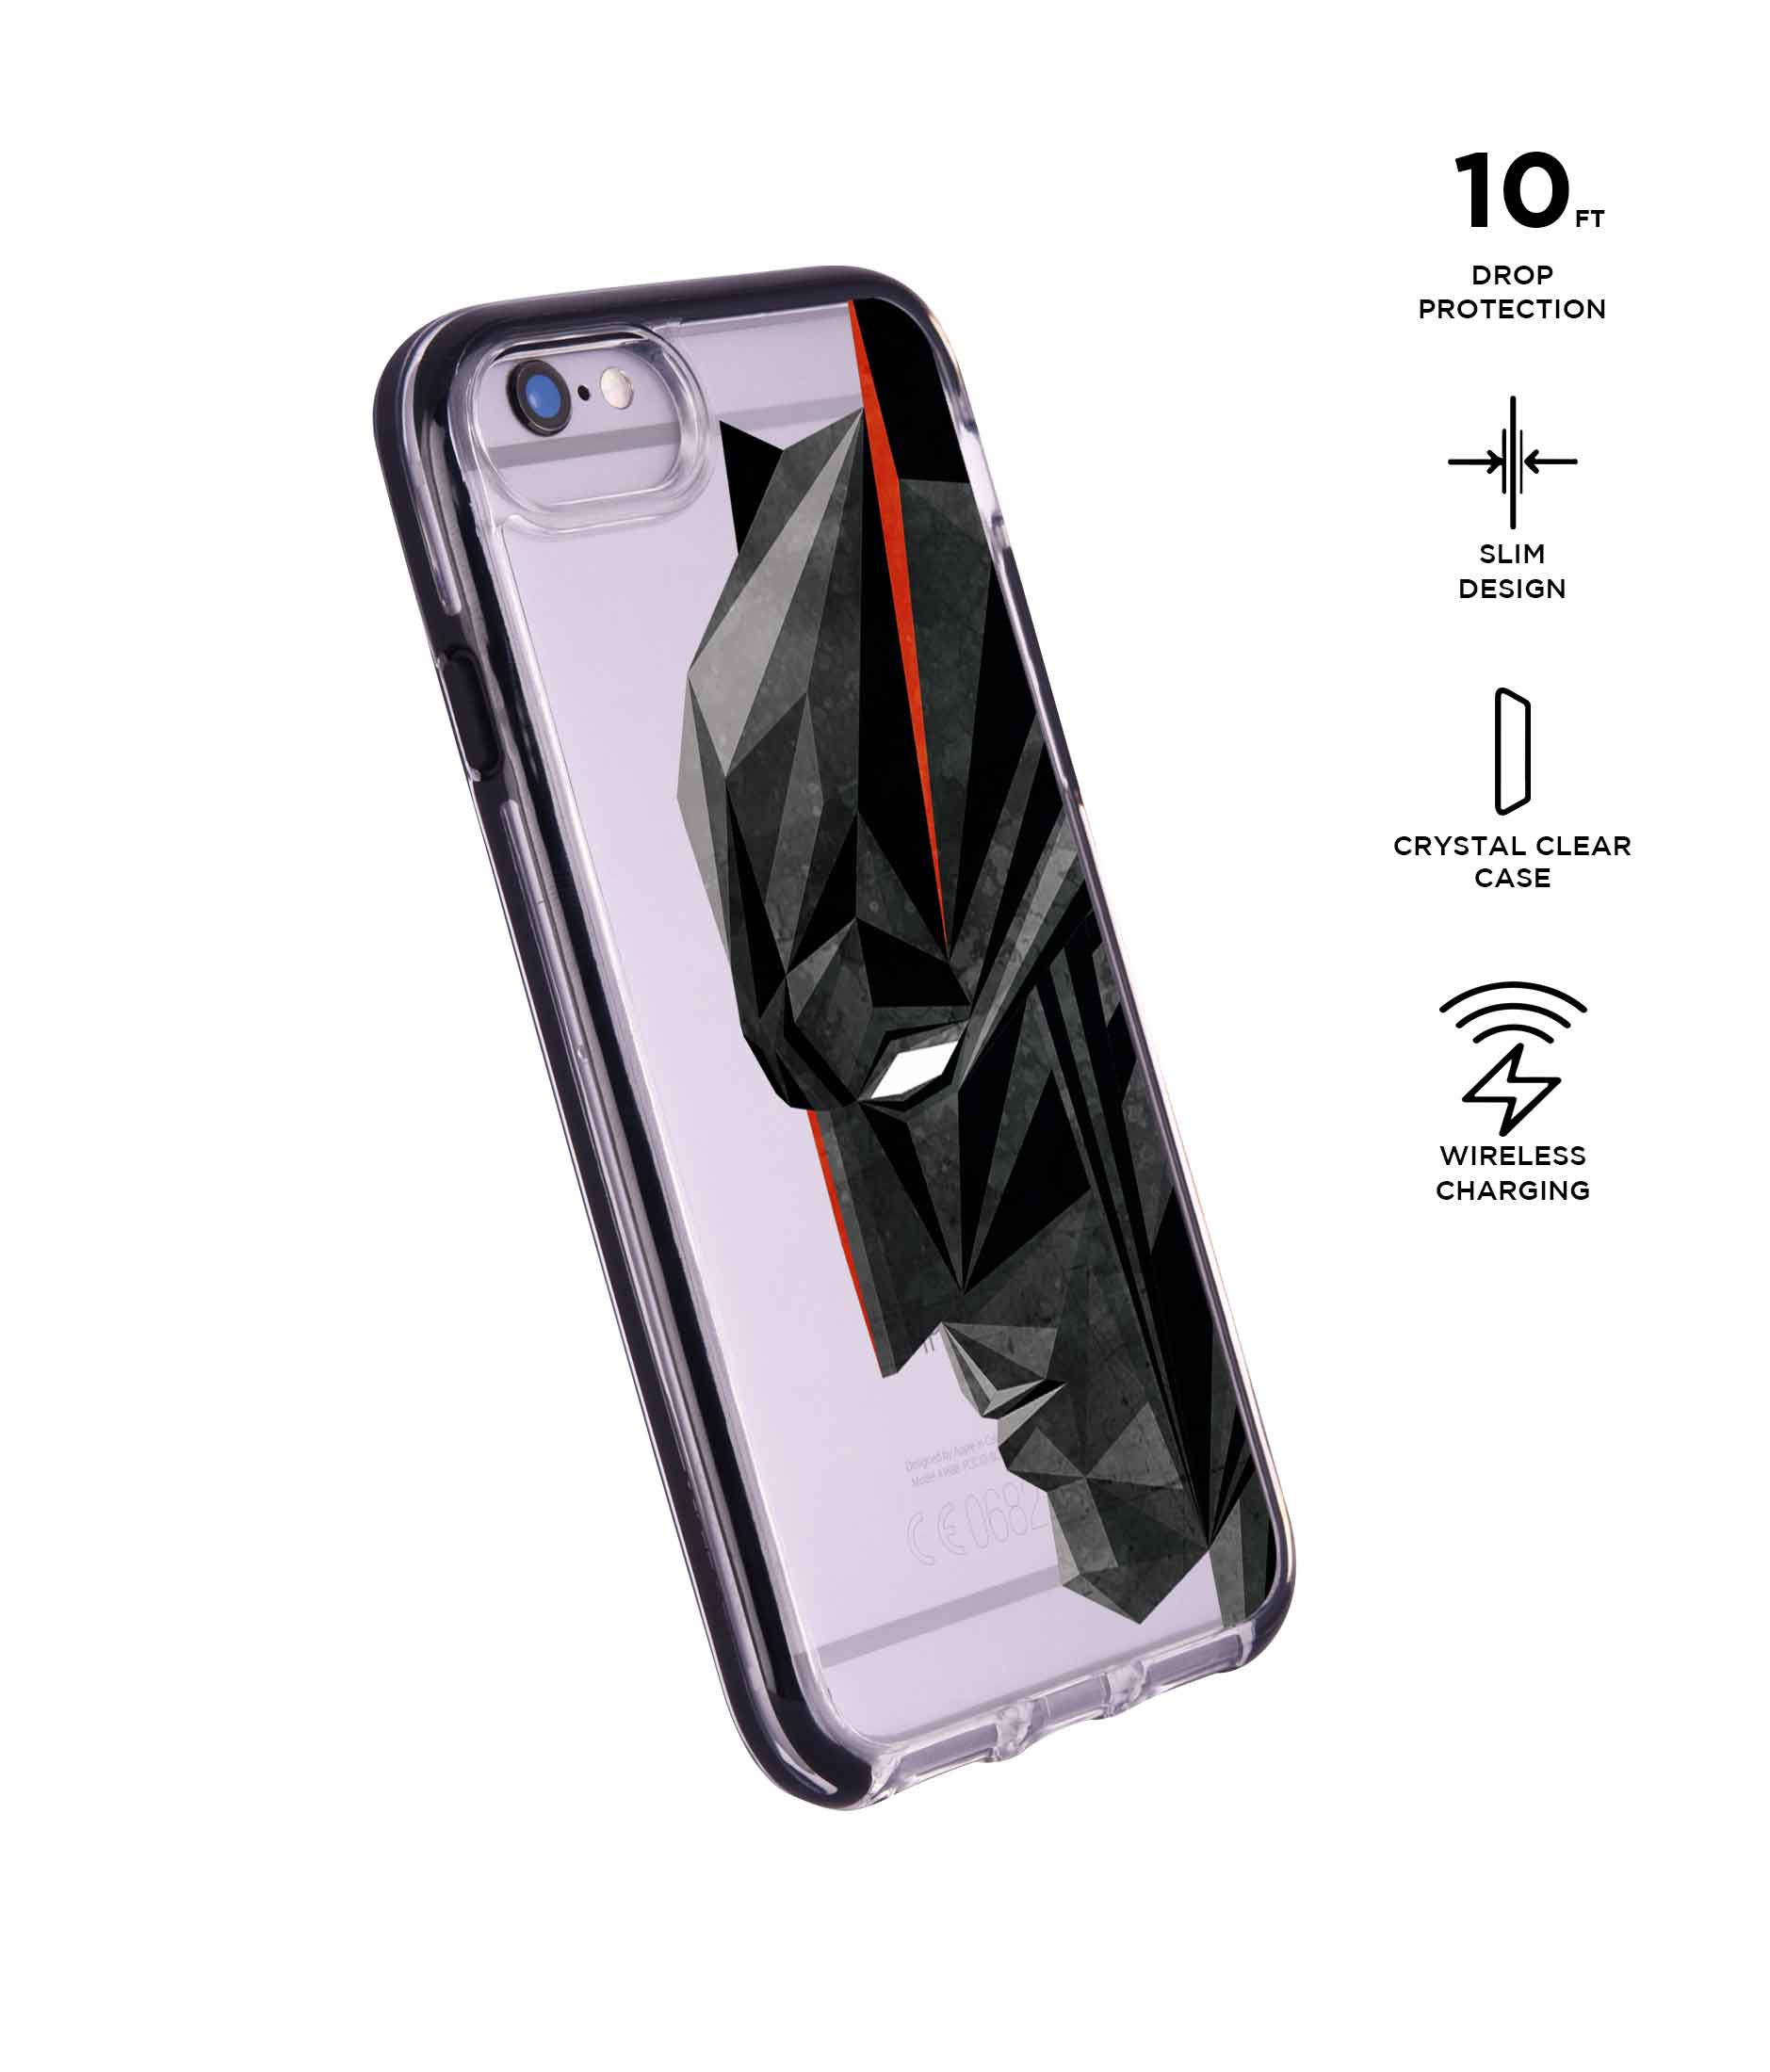 Batman Geometric - Extreme Phone Case for iPhone 6